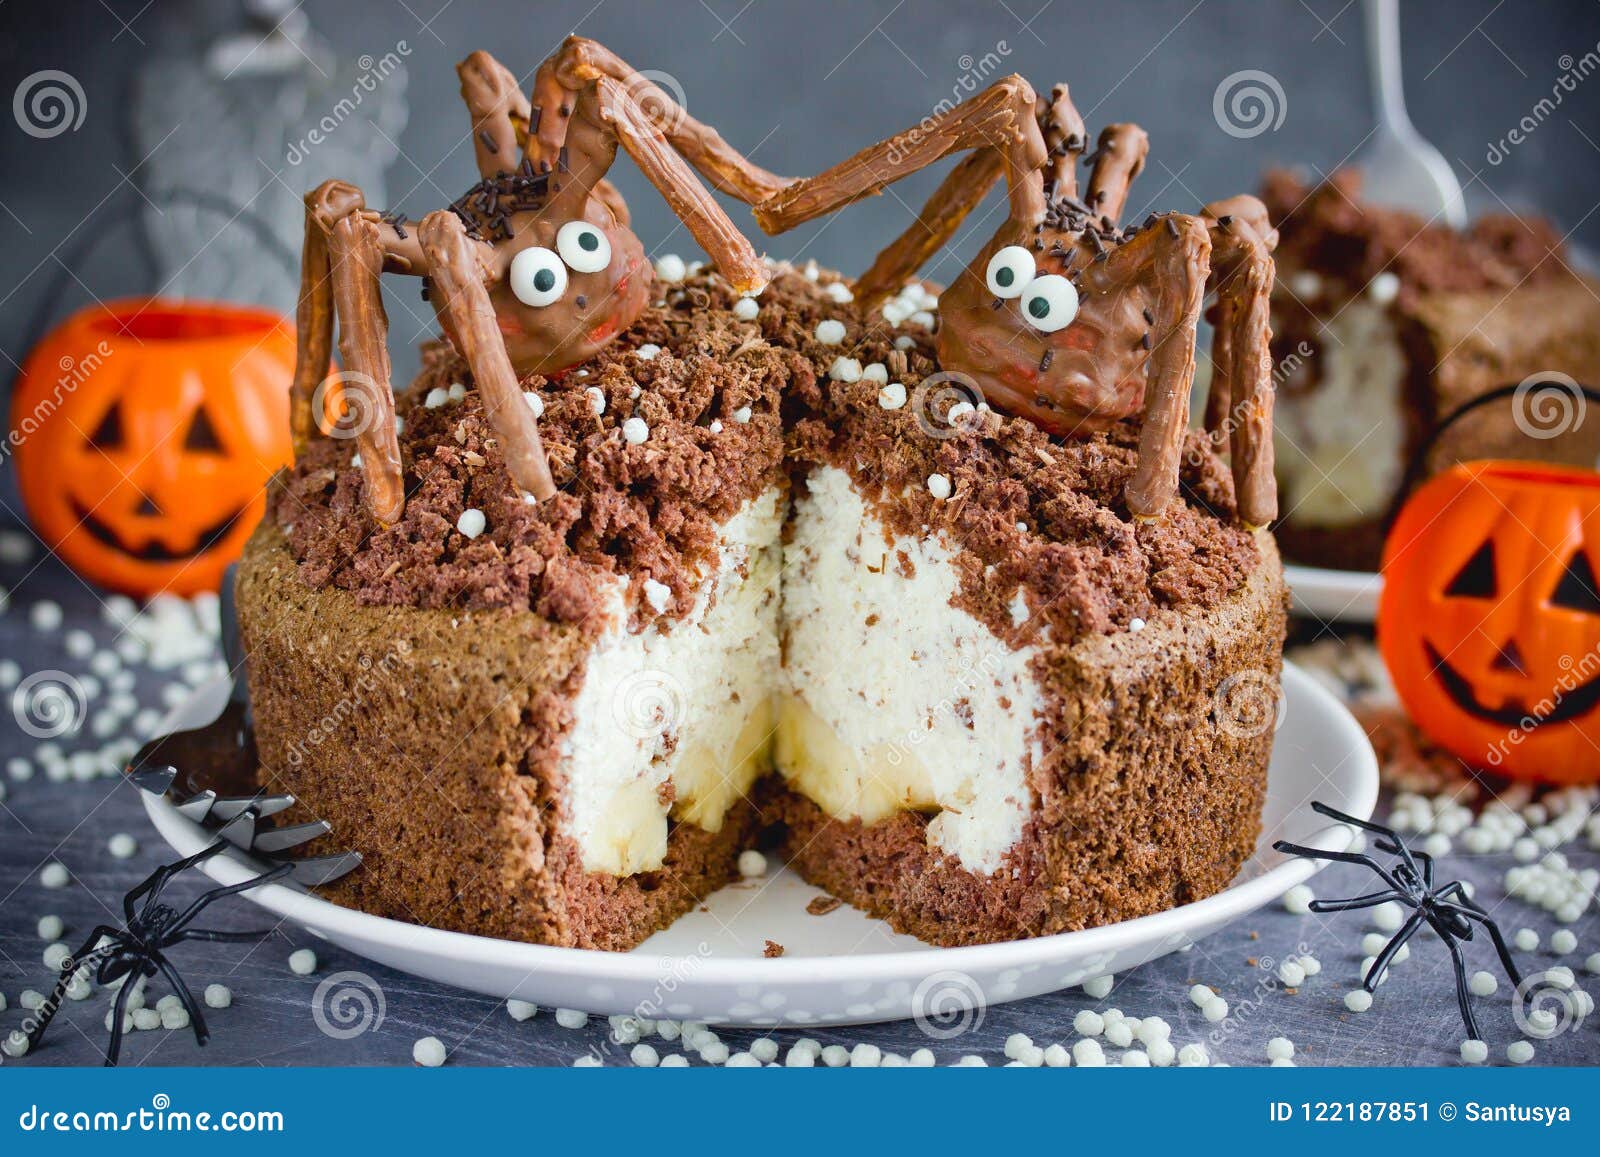 Halloween spider nest cake stock image. Image of creepy - 122187851